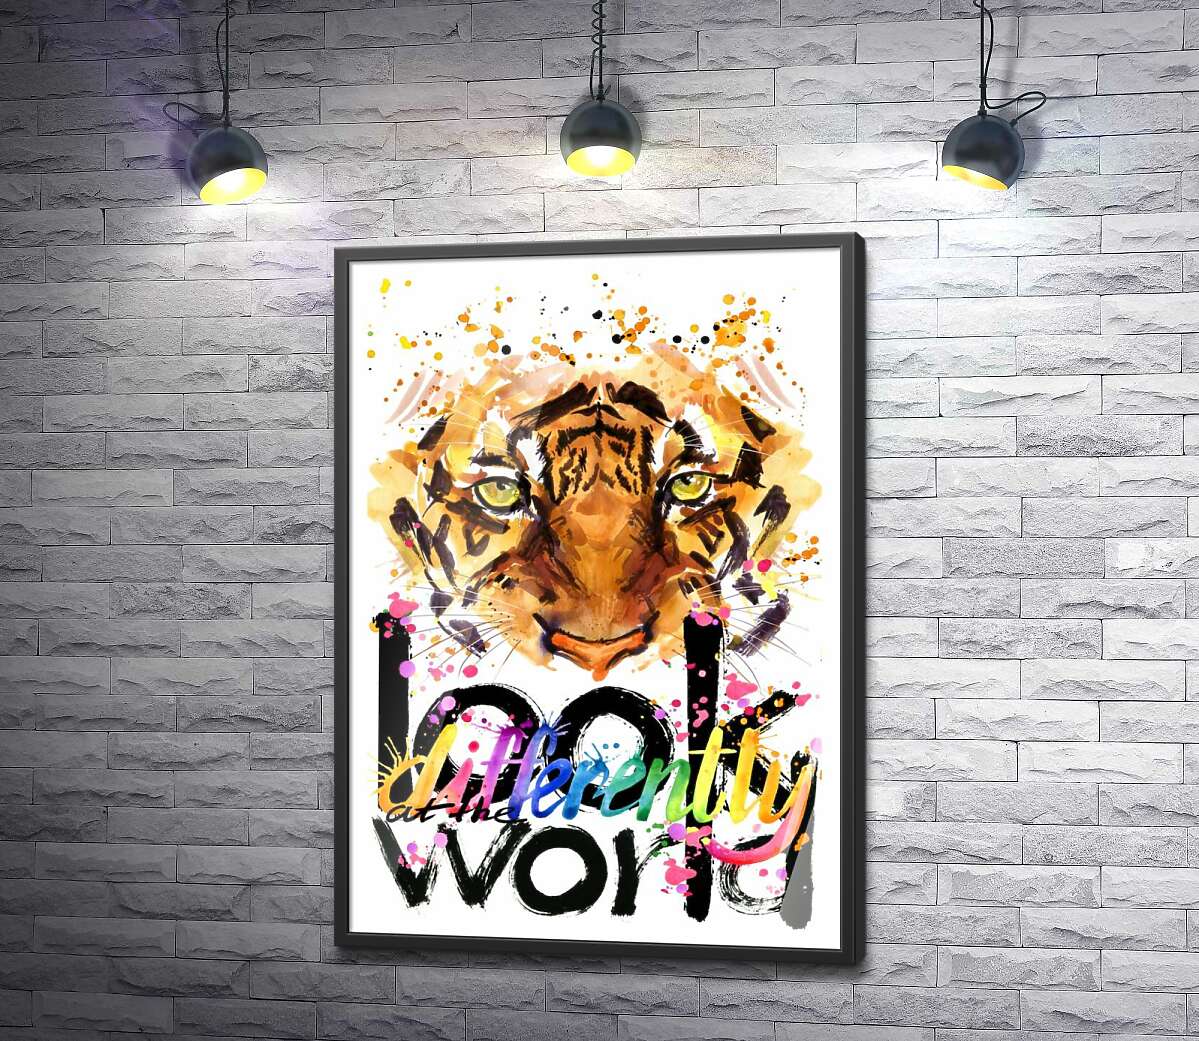 постер Силуэт тигра и надпись "look at the world differently"